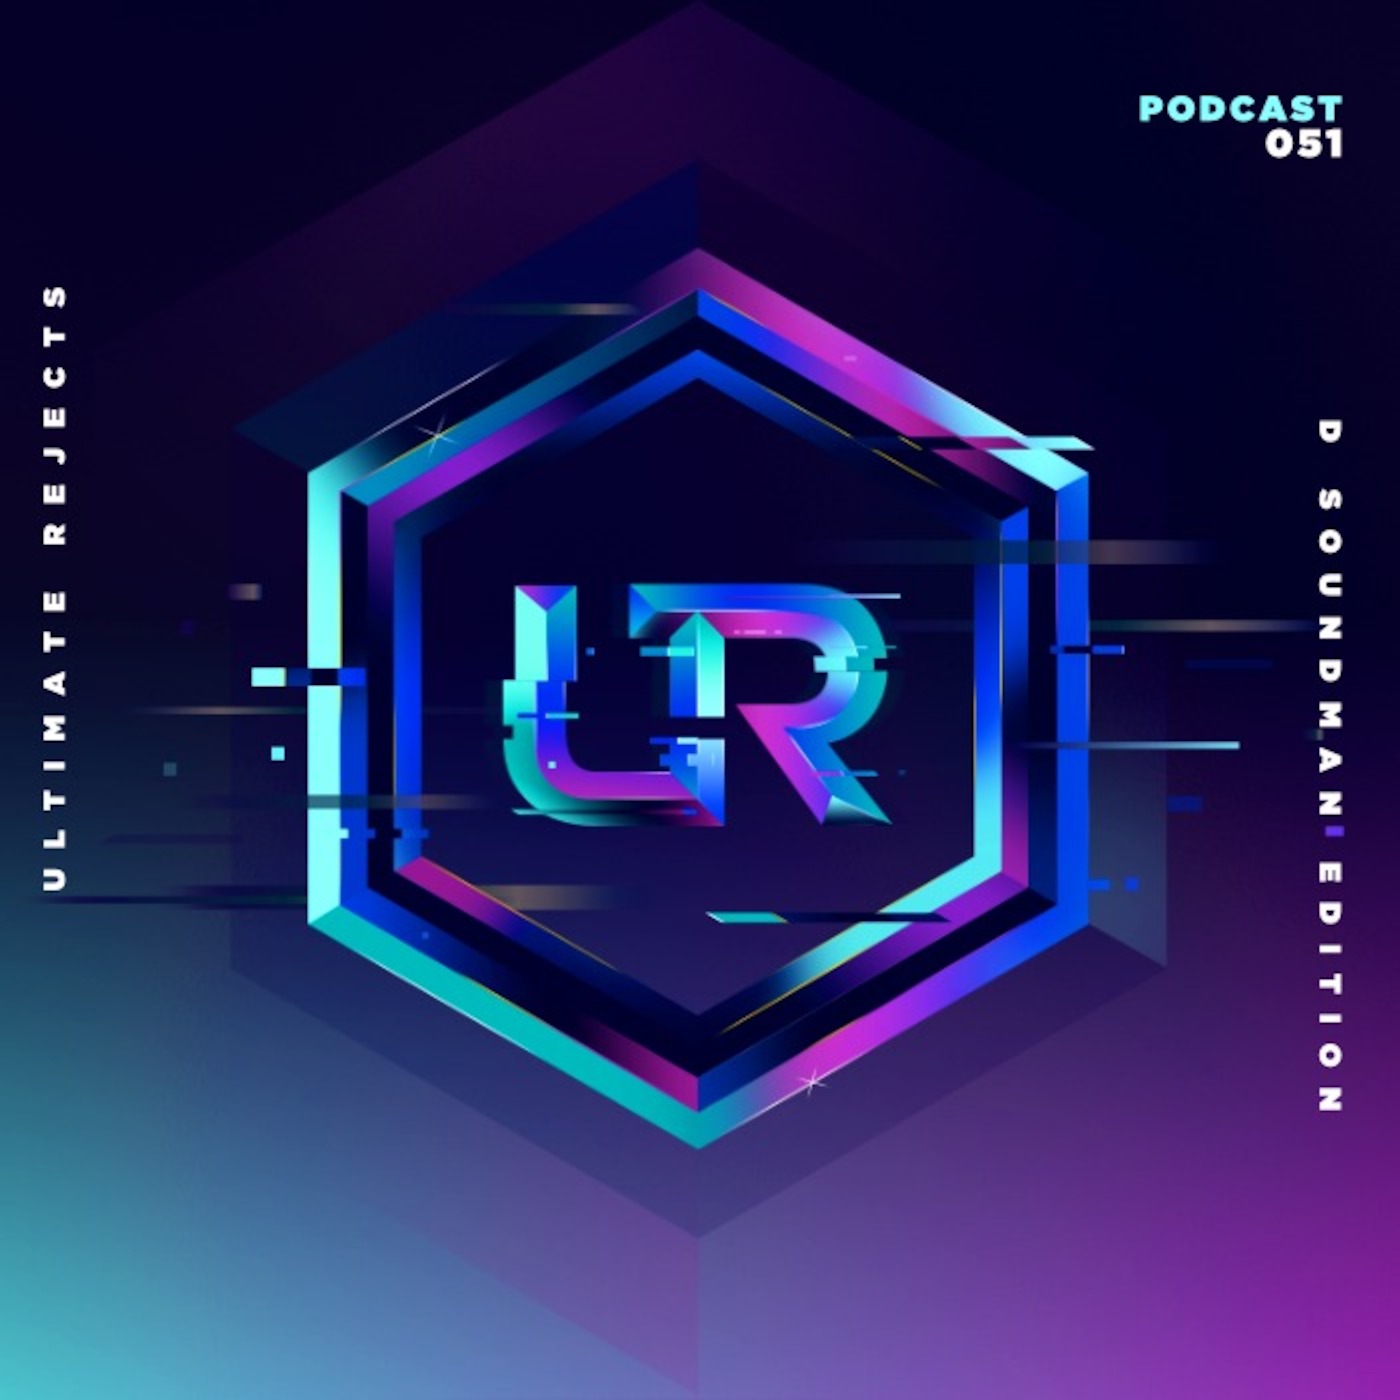 Ultimate Rejects UR Podcast 051 (D Soundman Edition)